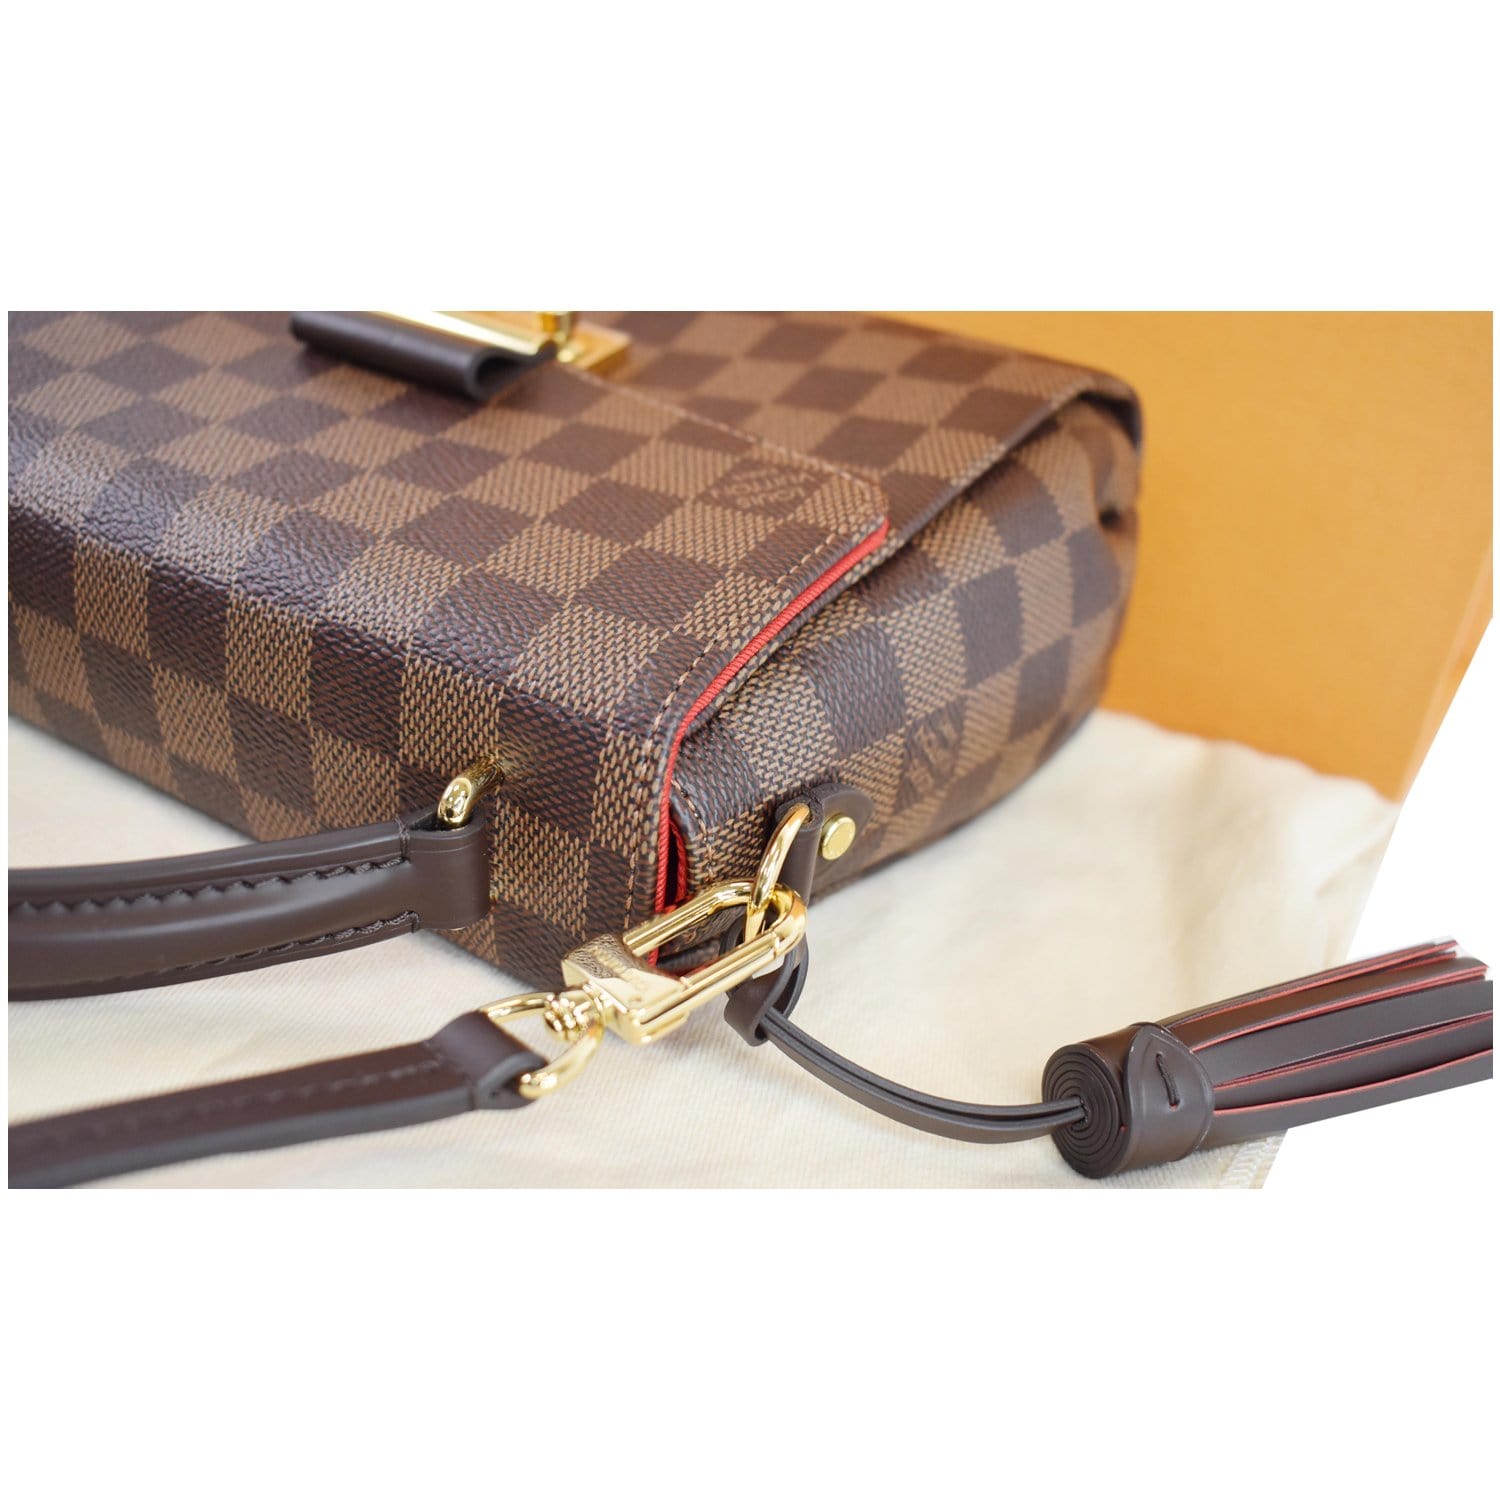 Croisette leather handbag Louis Vuitton Brown in Leather - 34855210